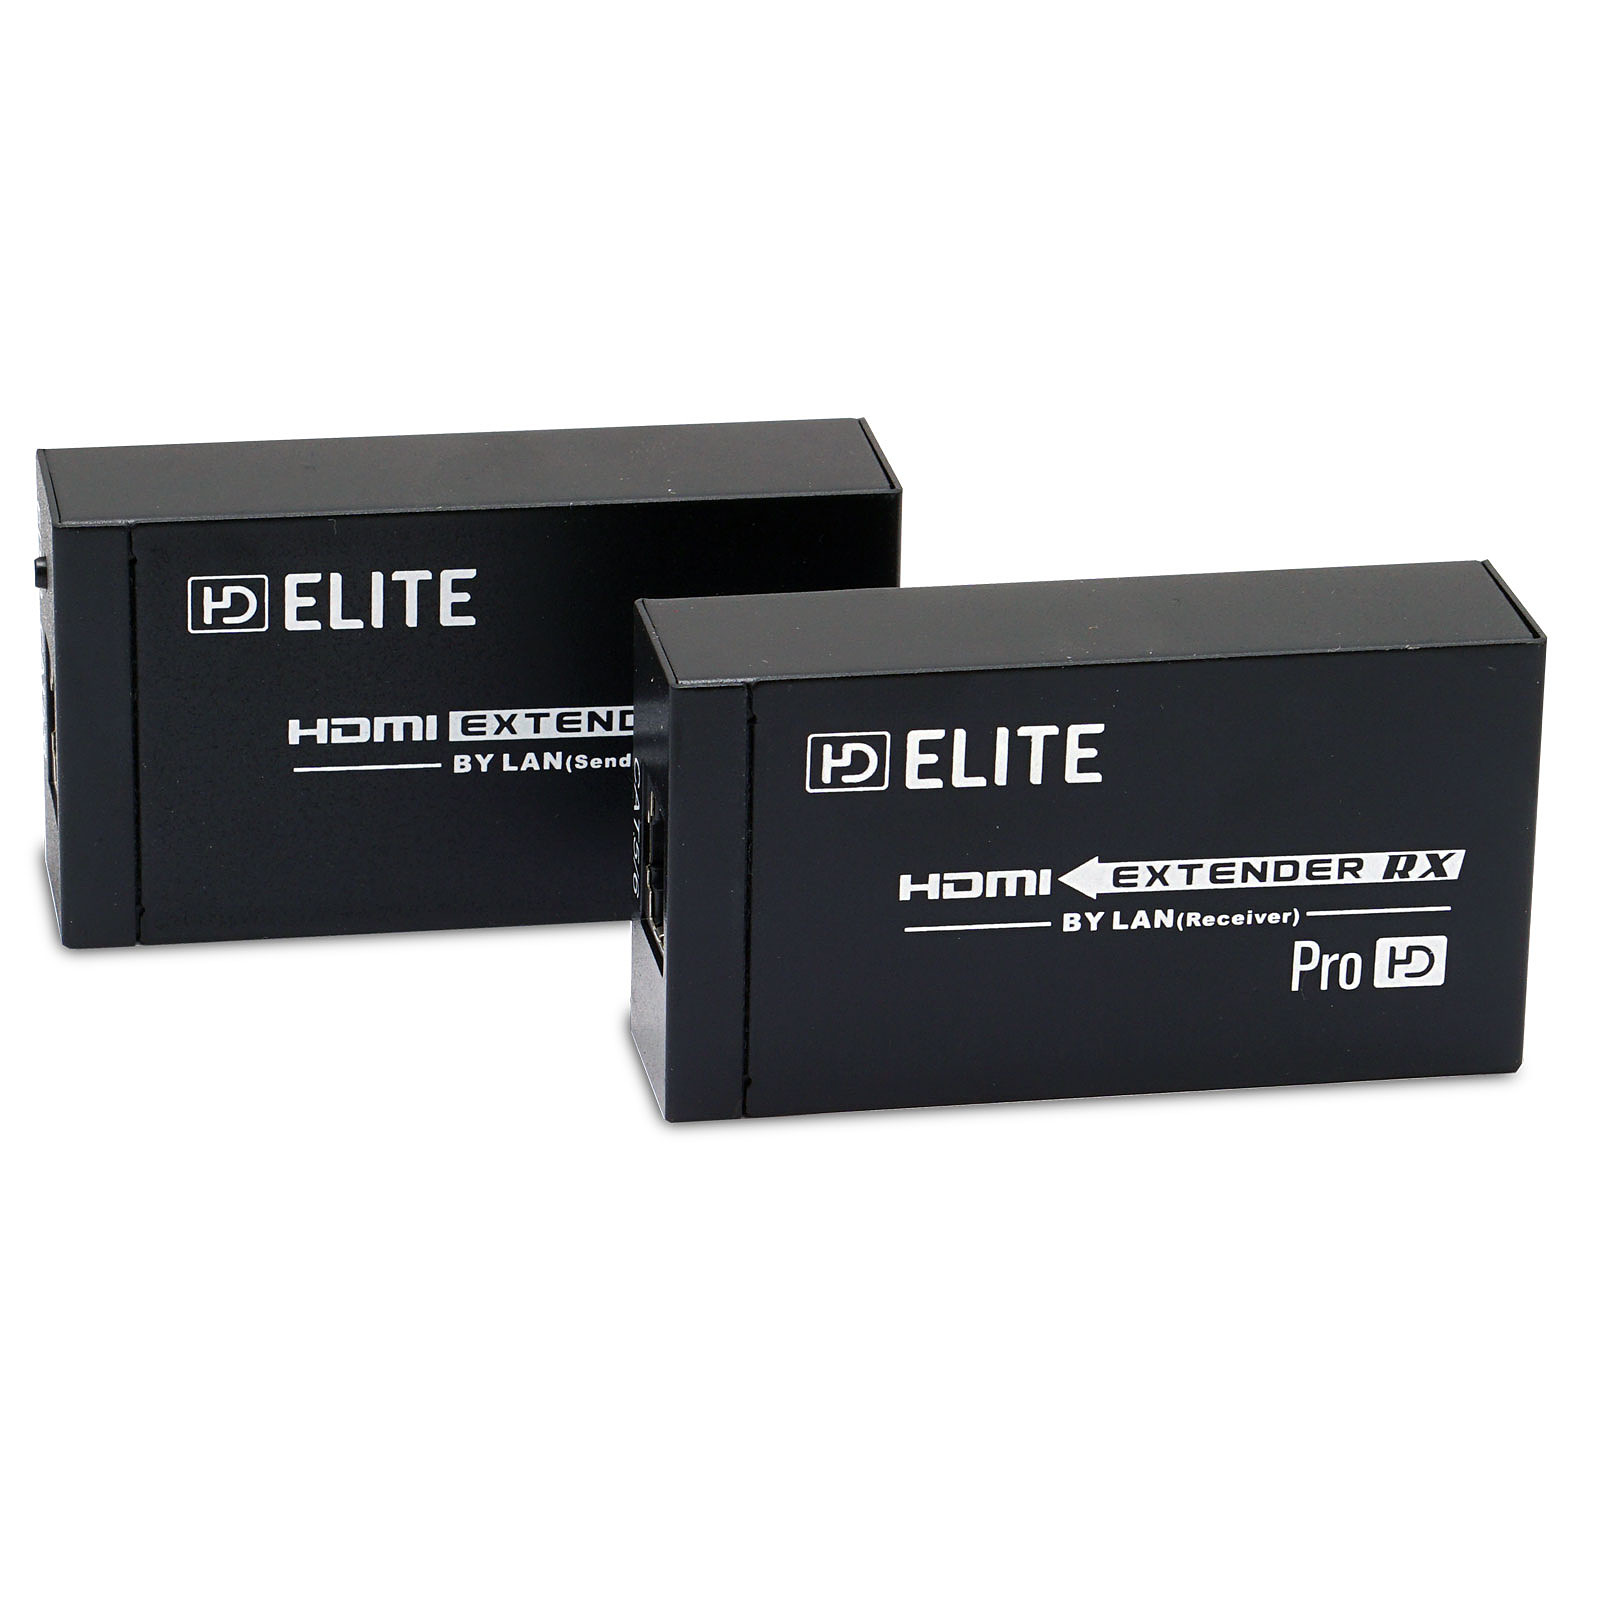 HDElite ProHD HDMI Extender 50 m - HDMI HDElite